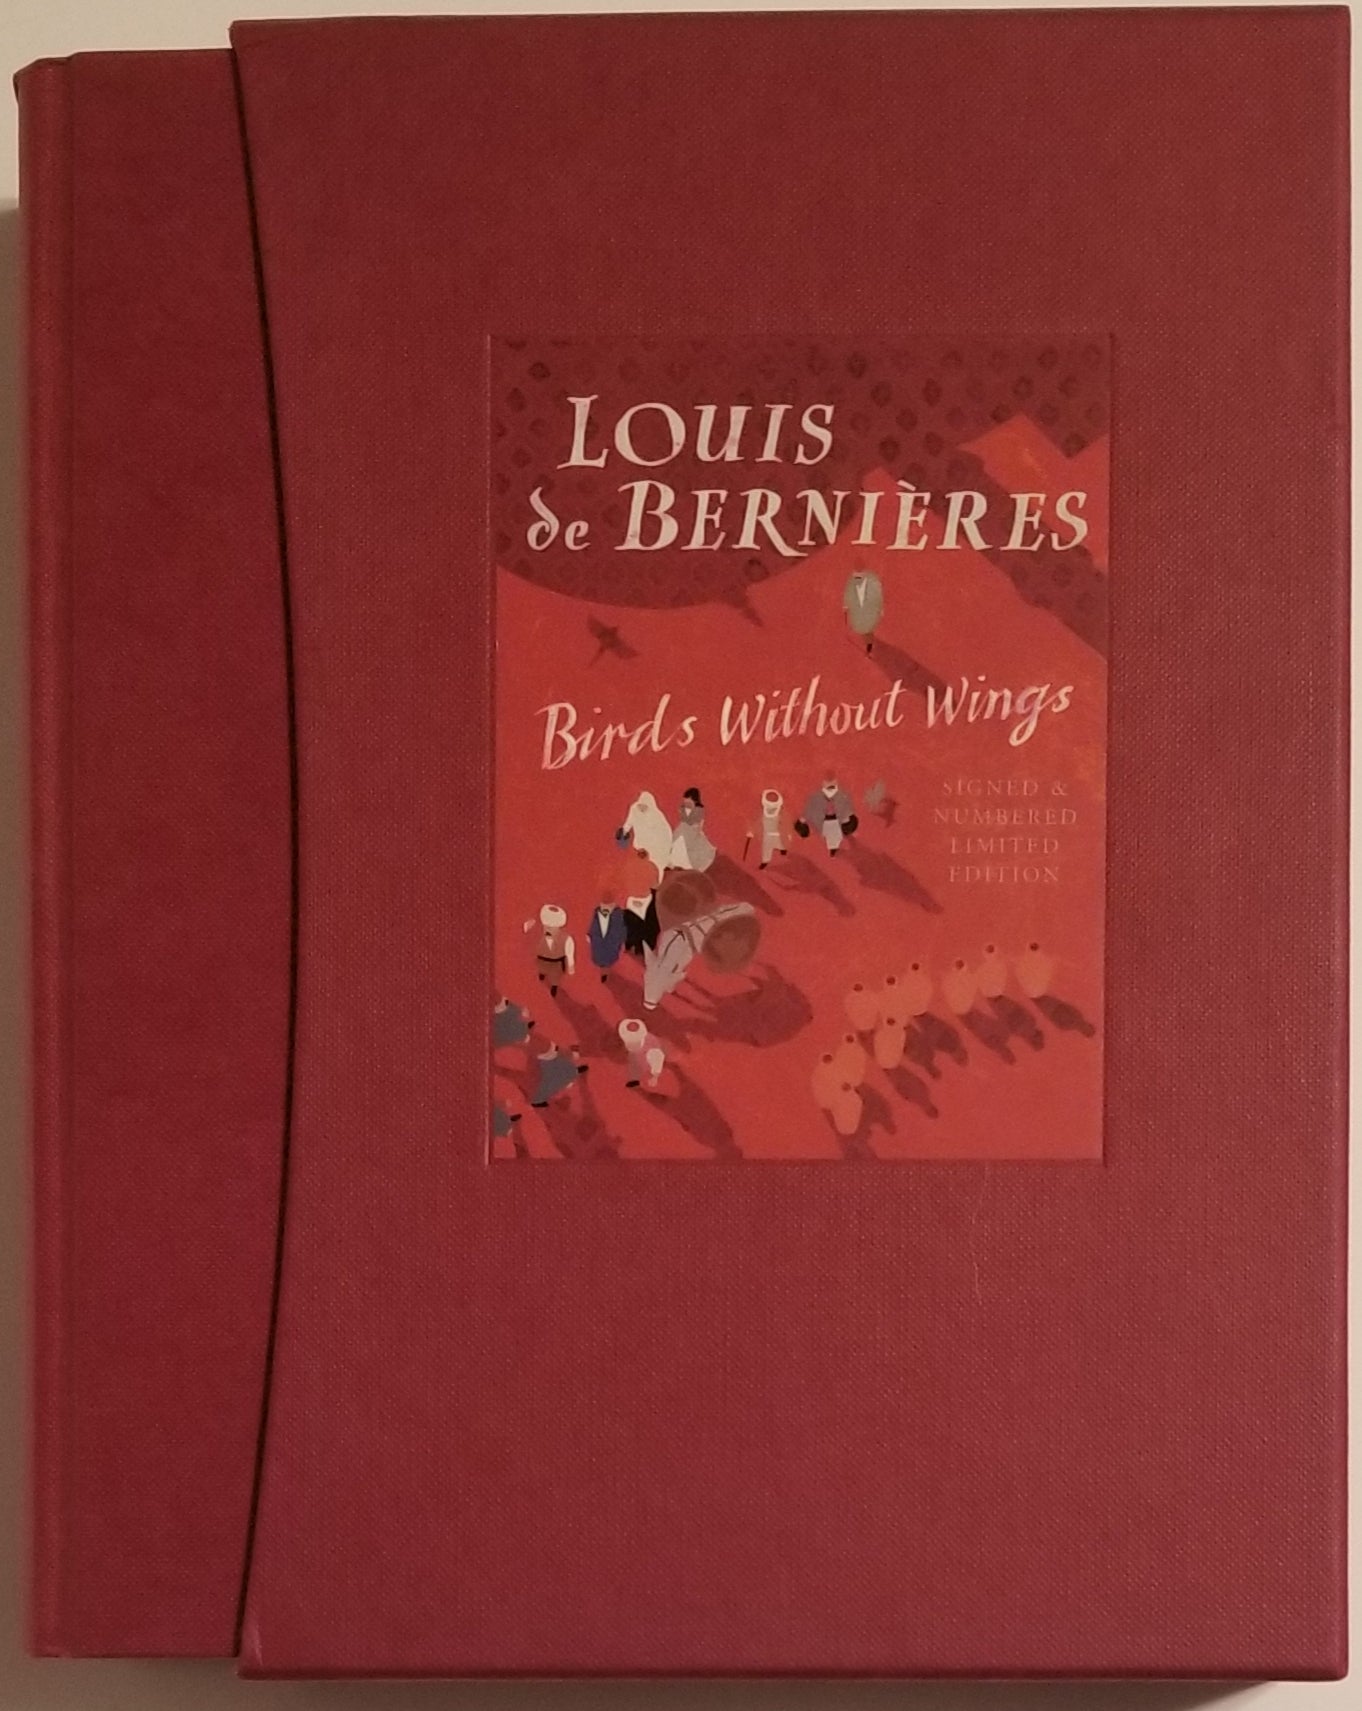 [Book #22247] BIRDS WITHOUT WINGS. Louis de Bernieres.